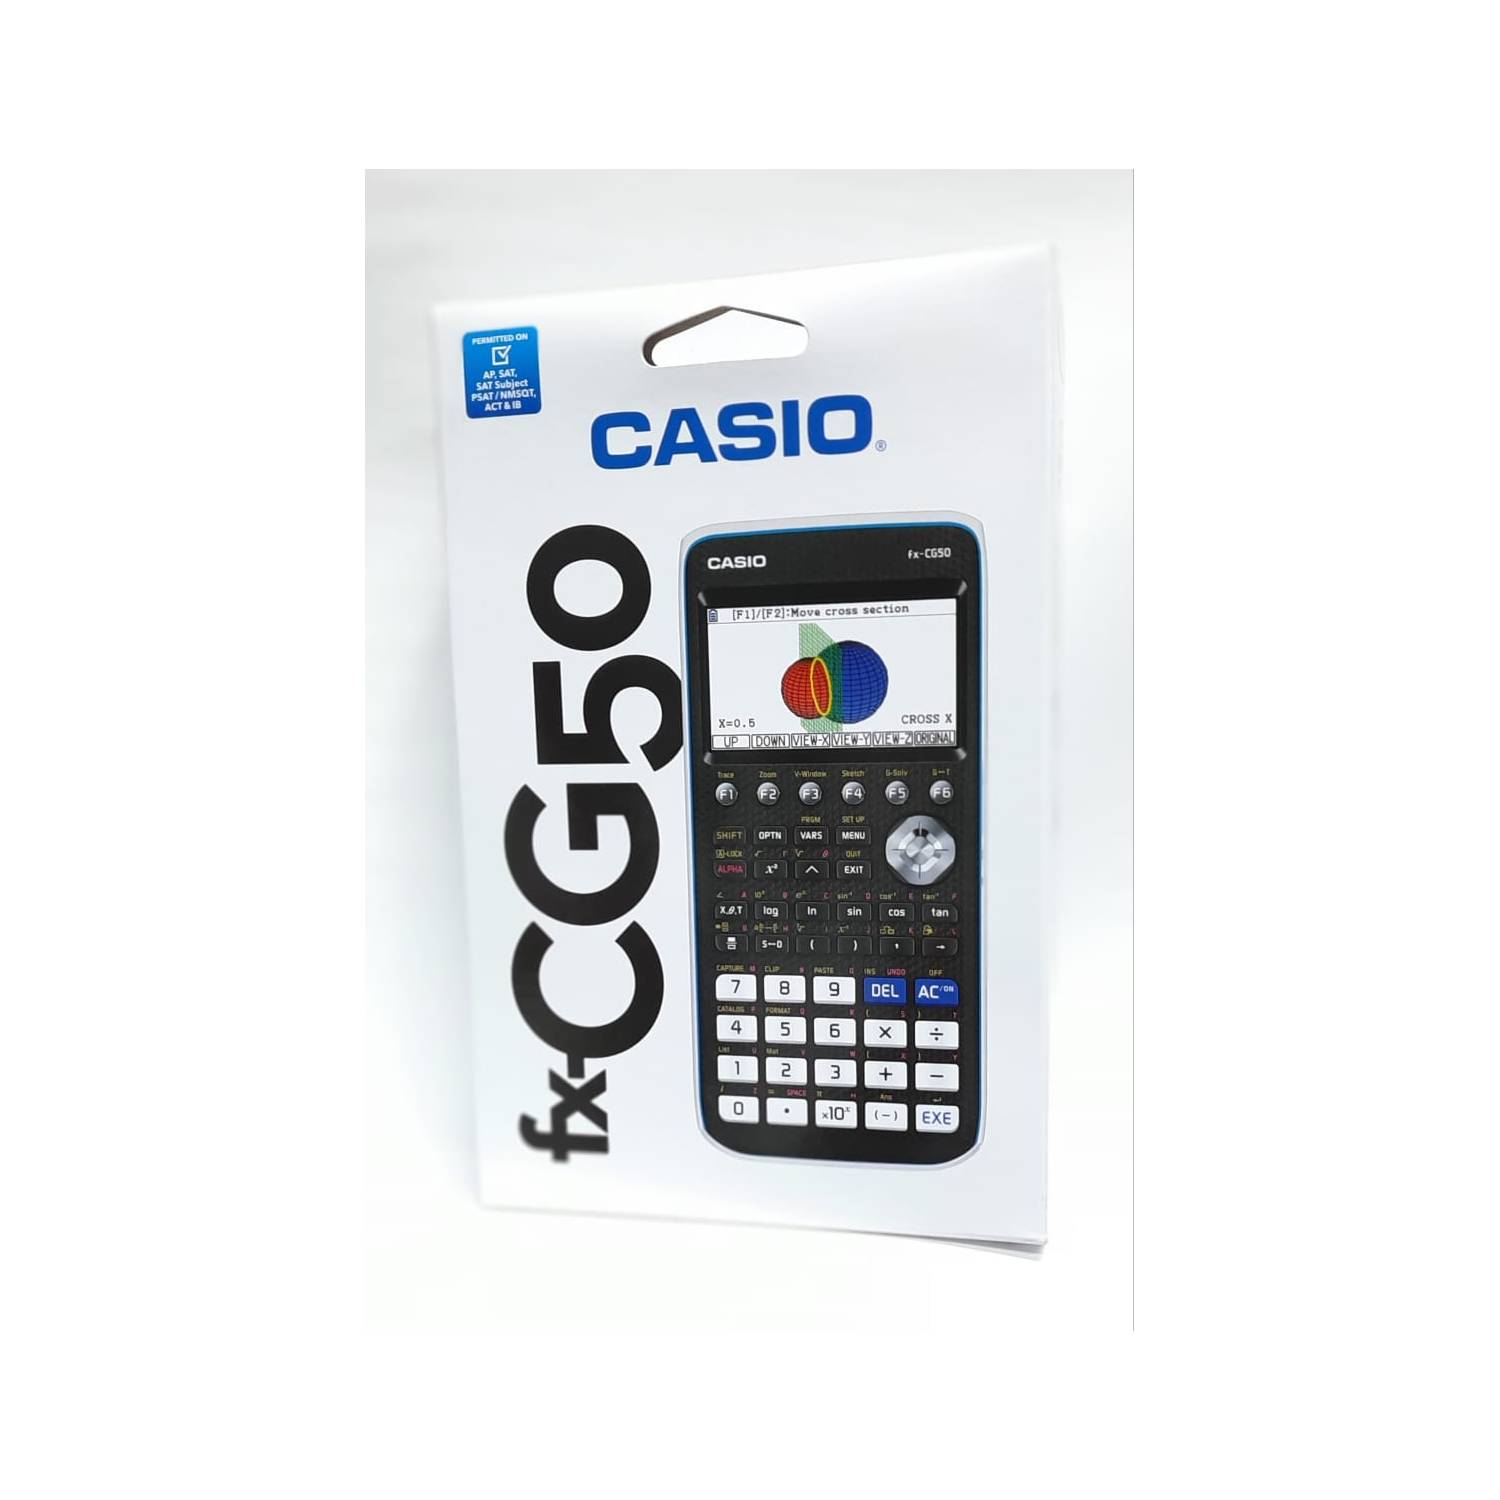 Oponerse a margen algo Calculadora Grafica Casio FX-CG50 CASIO | falabella.com